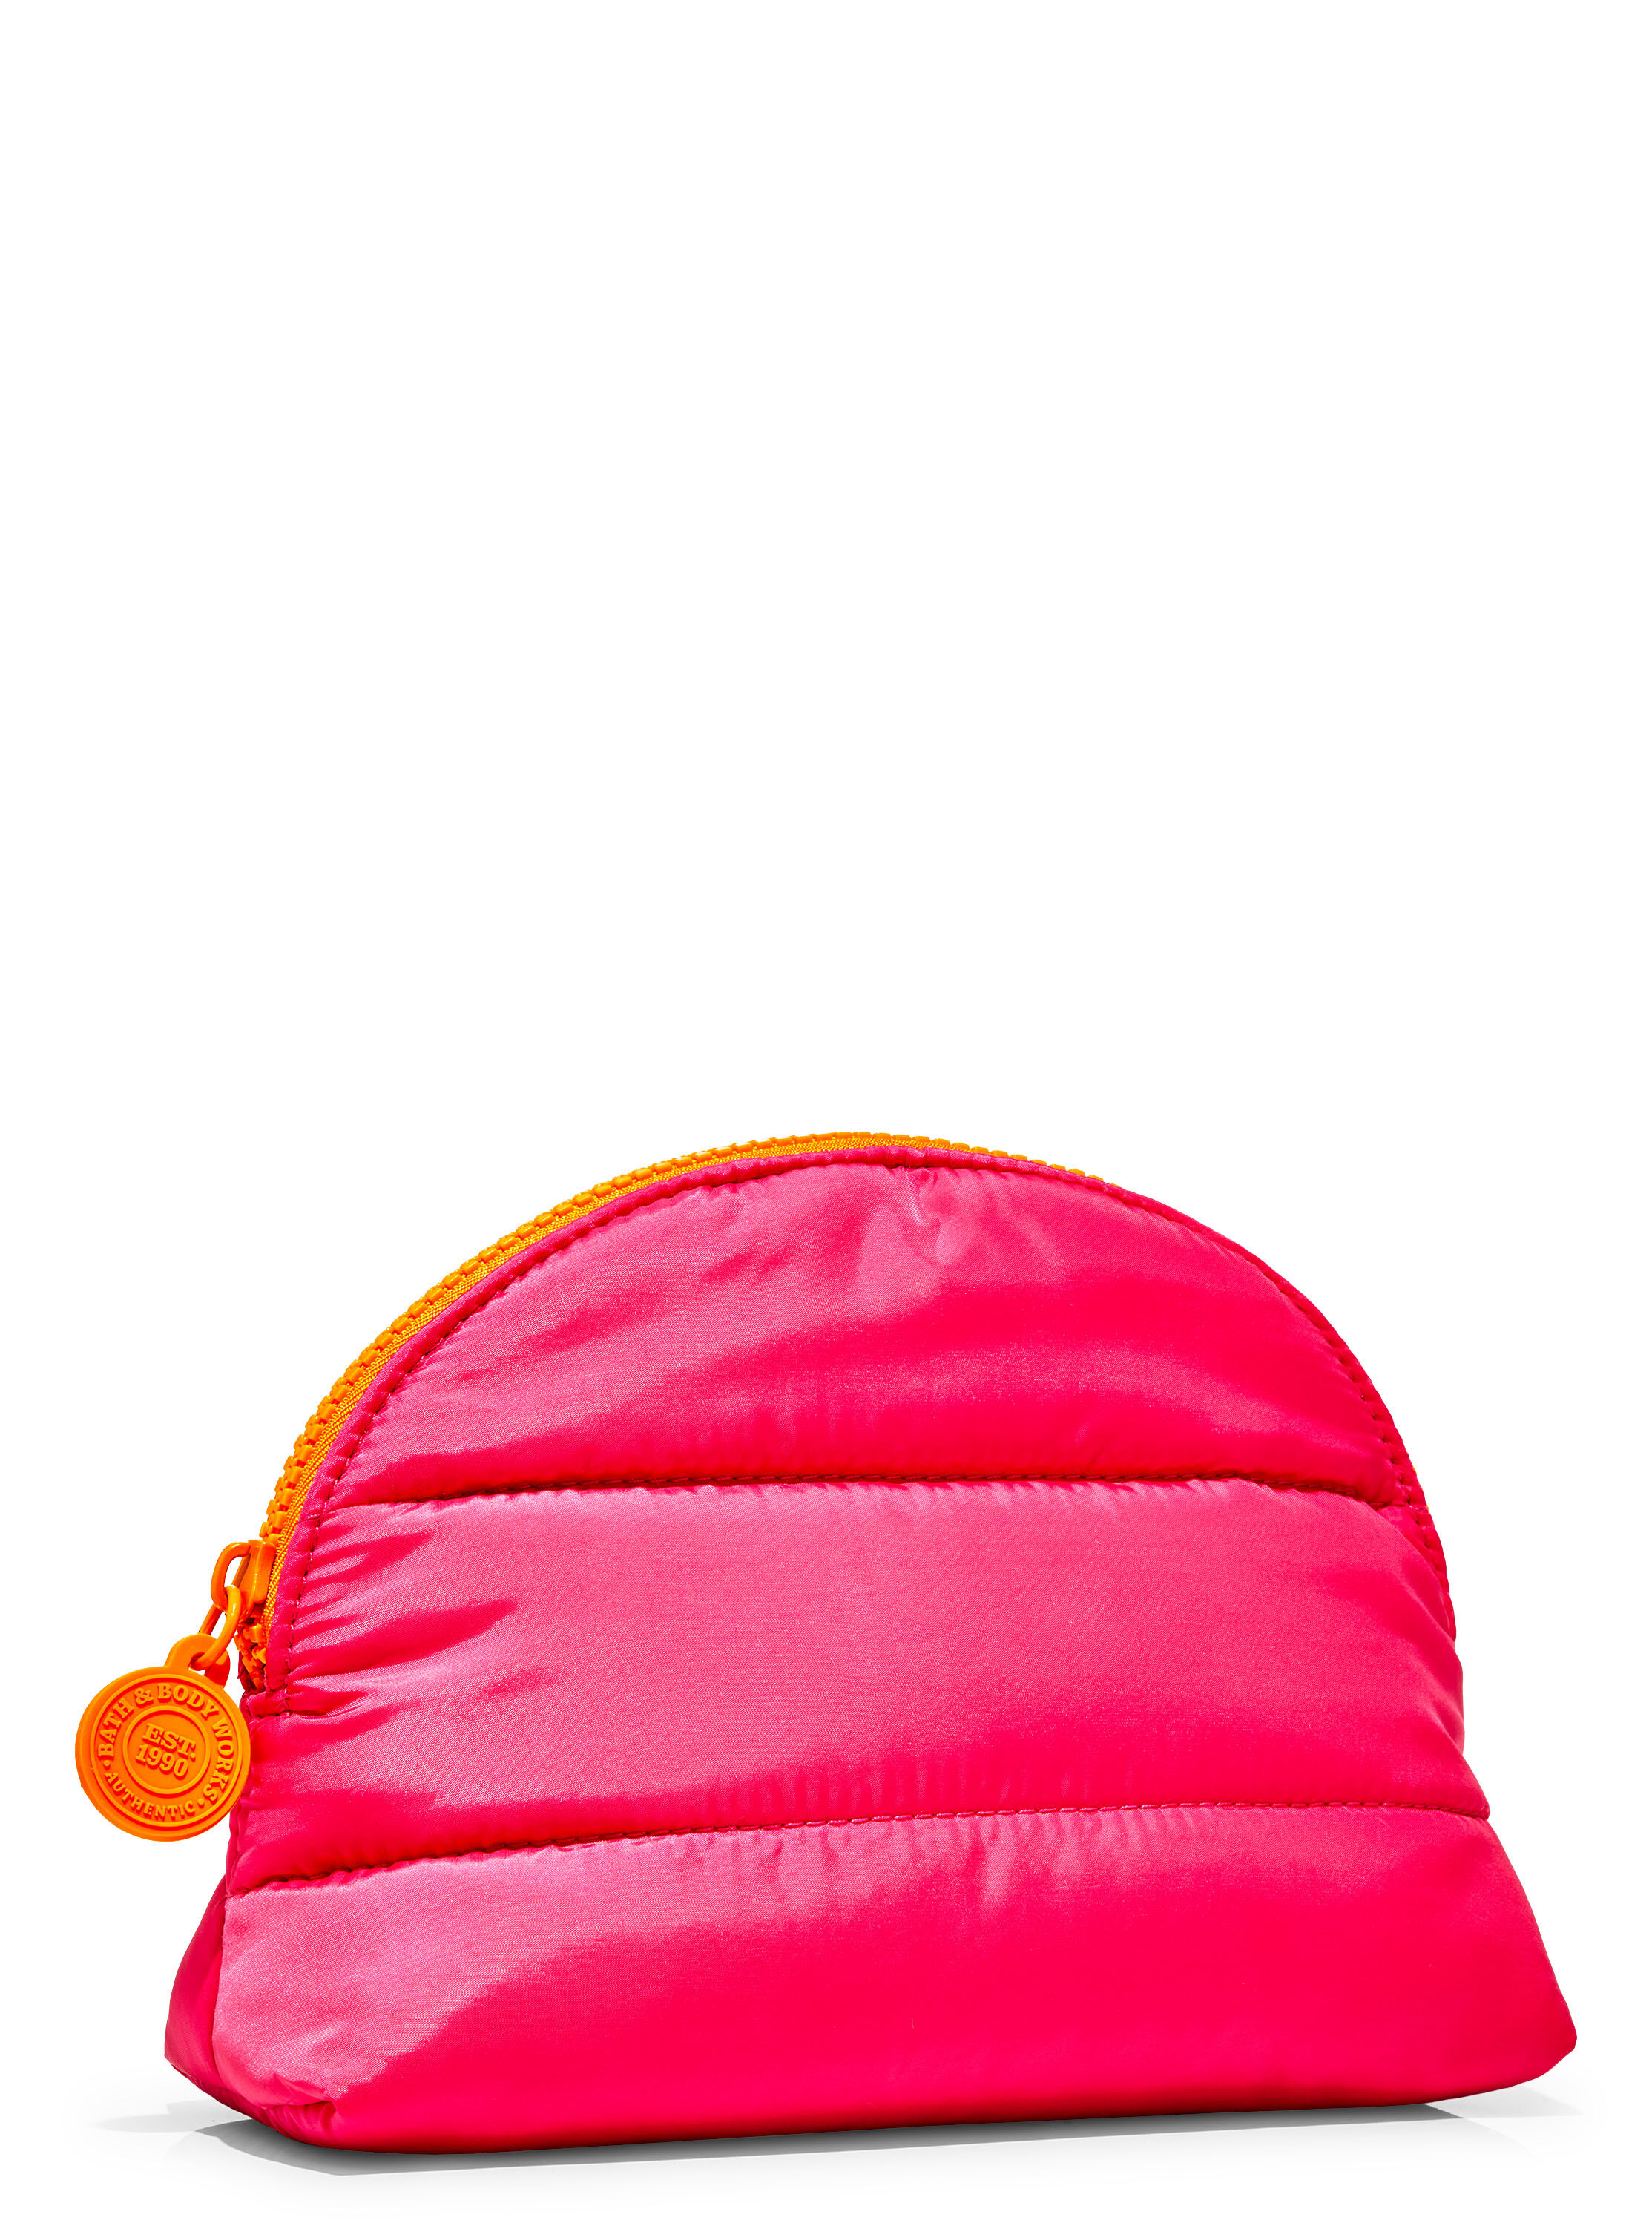 Pink Dopp Kit Cosmetic Bag